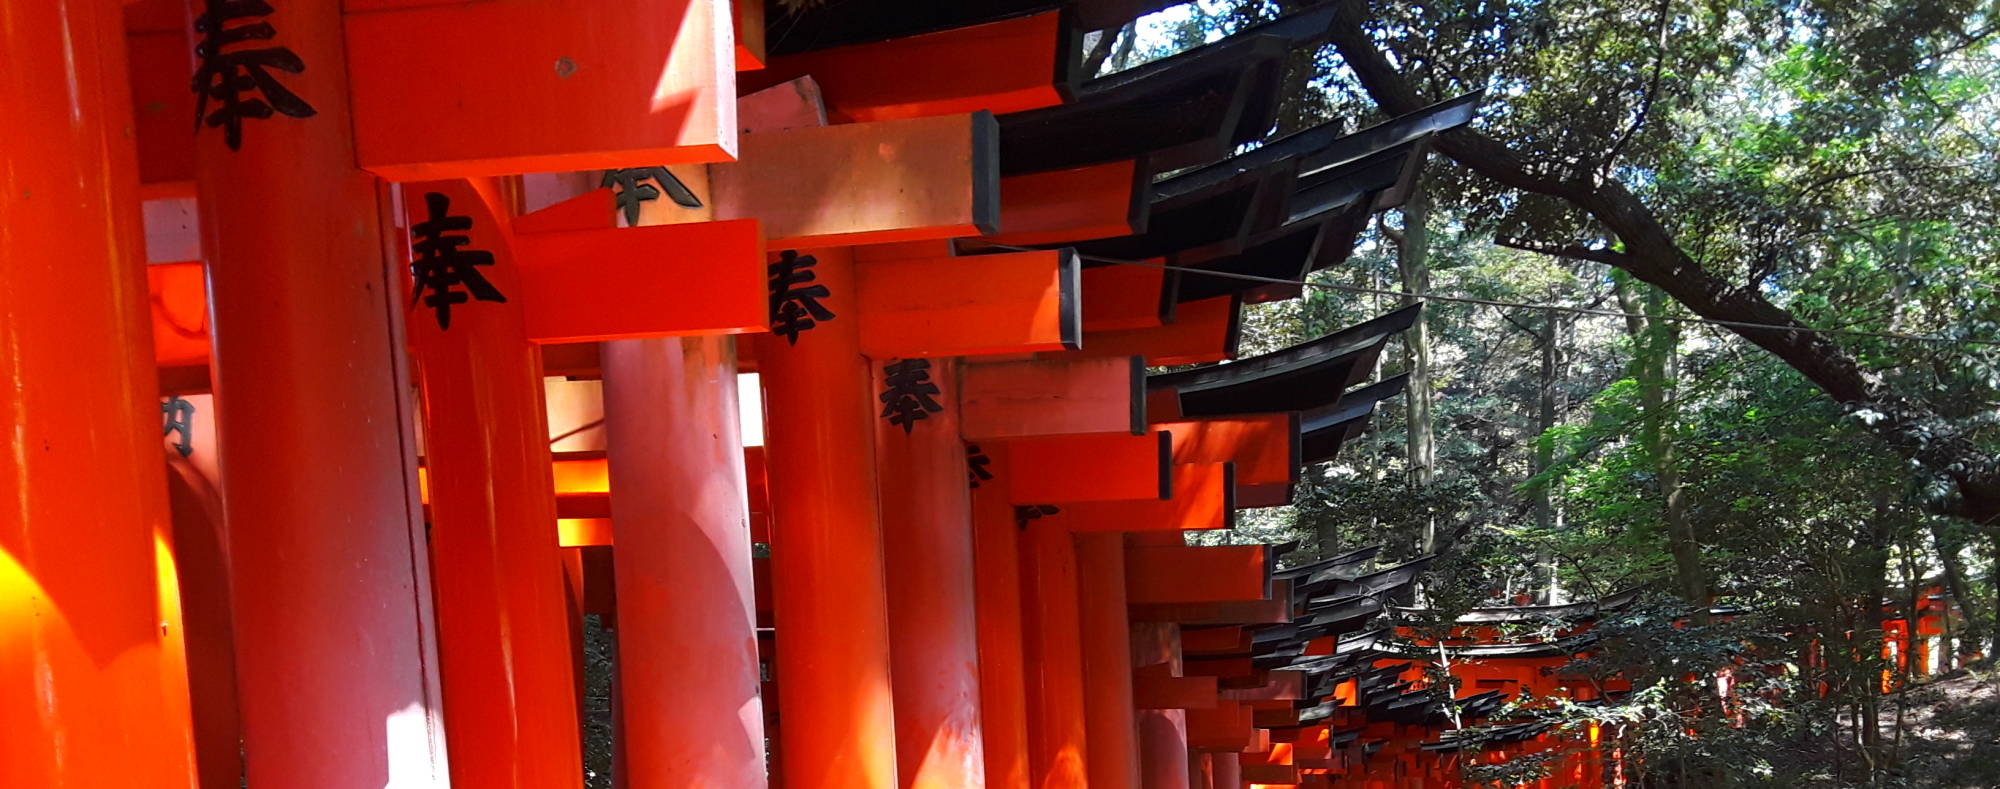 Torii at Fushimi Inari-Taisha, southeast of Kyōto.